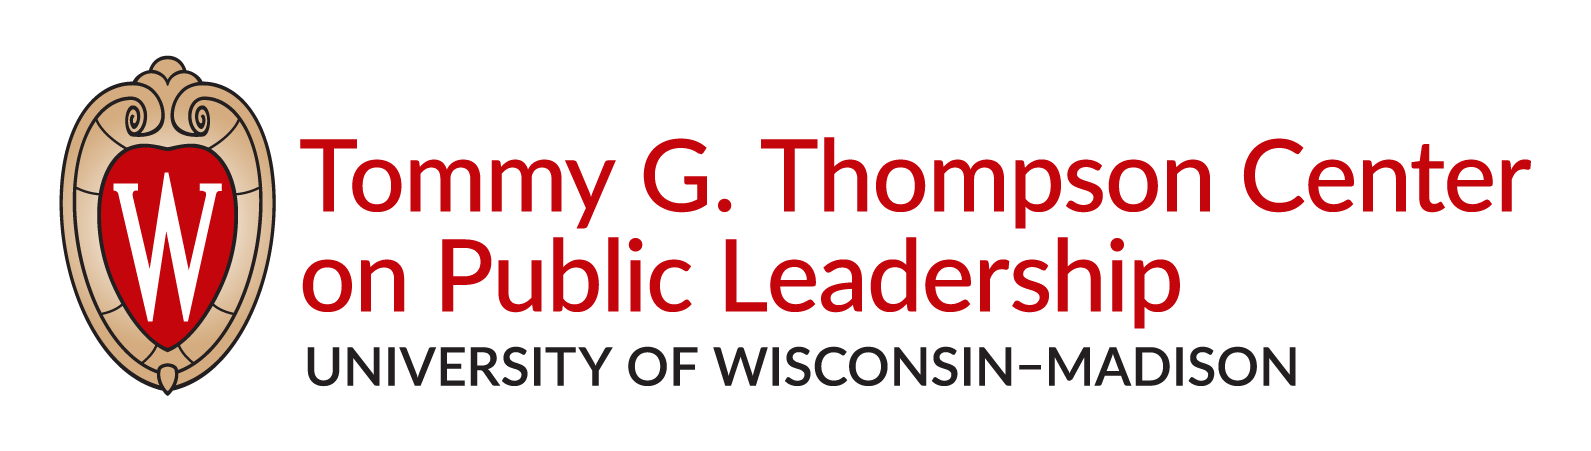 Tommy G. Thompson Center on Public Leadership